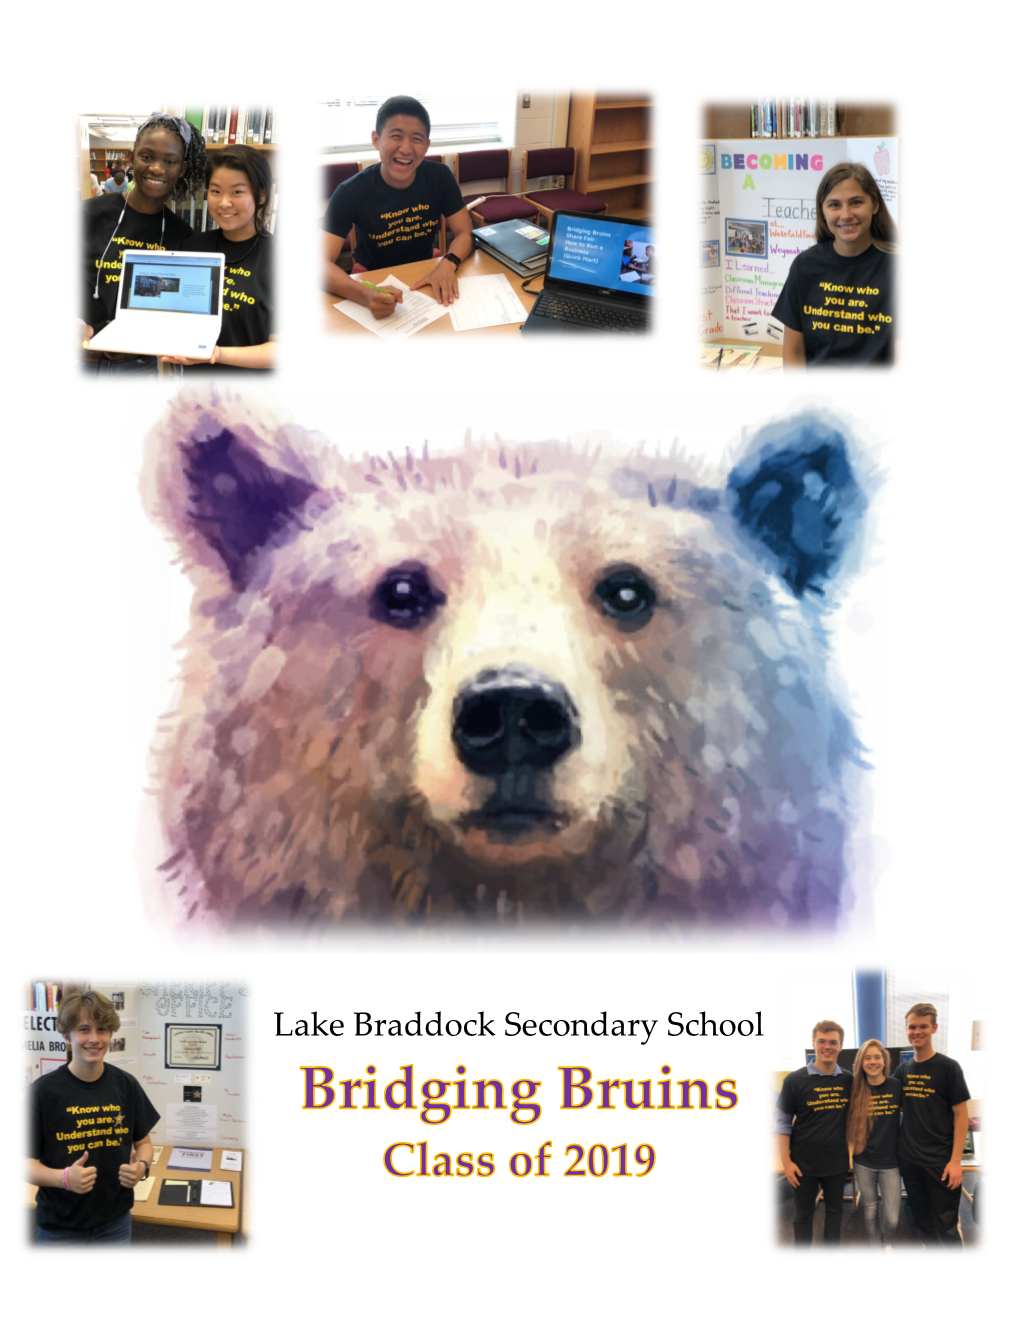 Bridging Bruins Annual Report Class of 2019